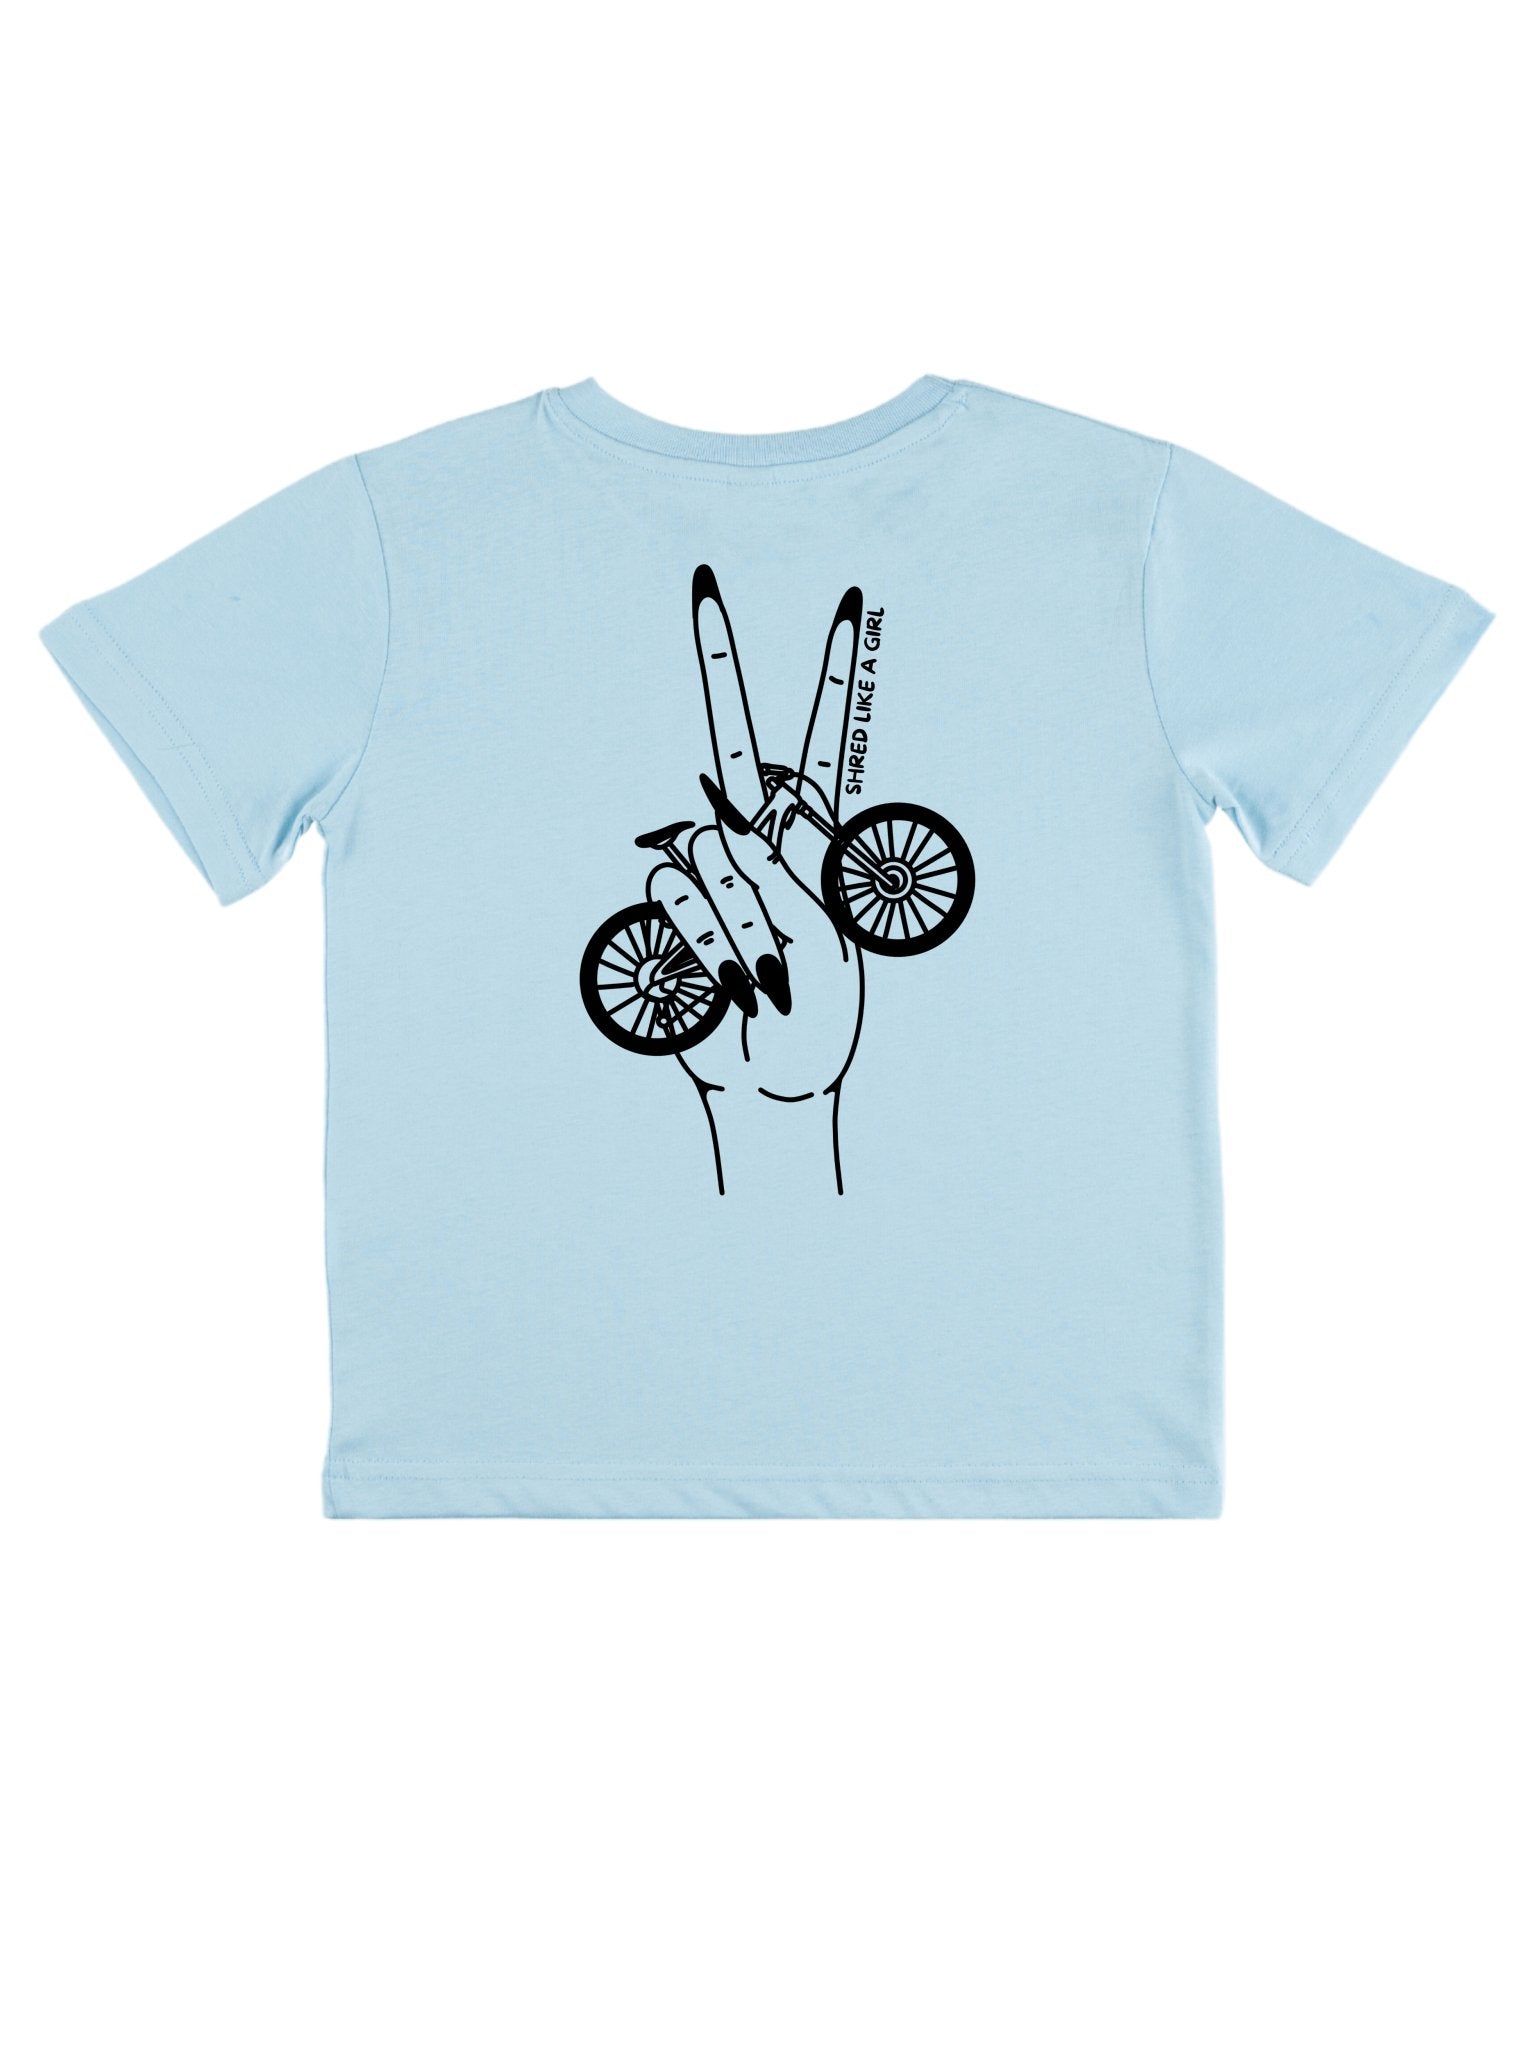 Bike Peace Youth Tee | Blue - Shred Like a Girl